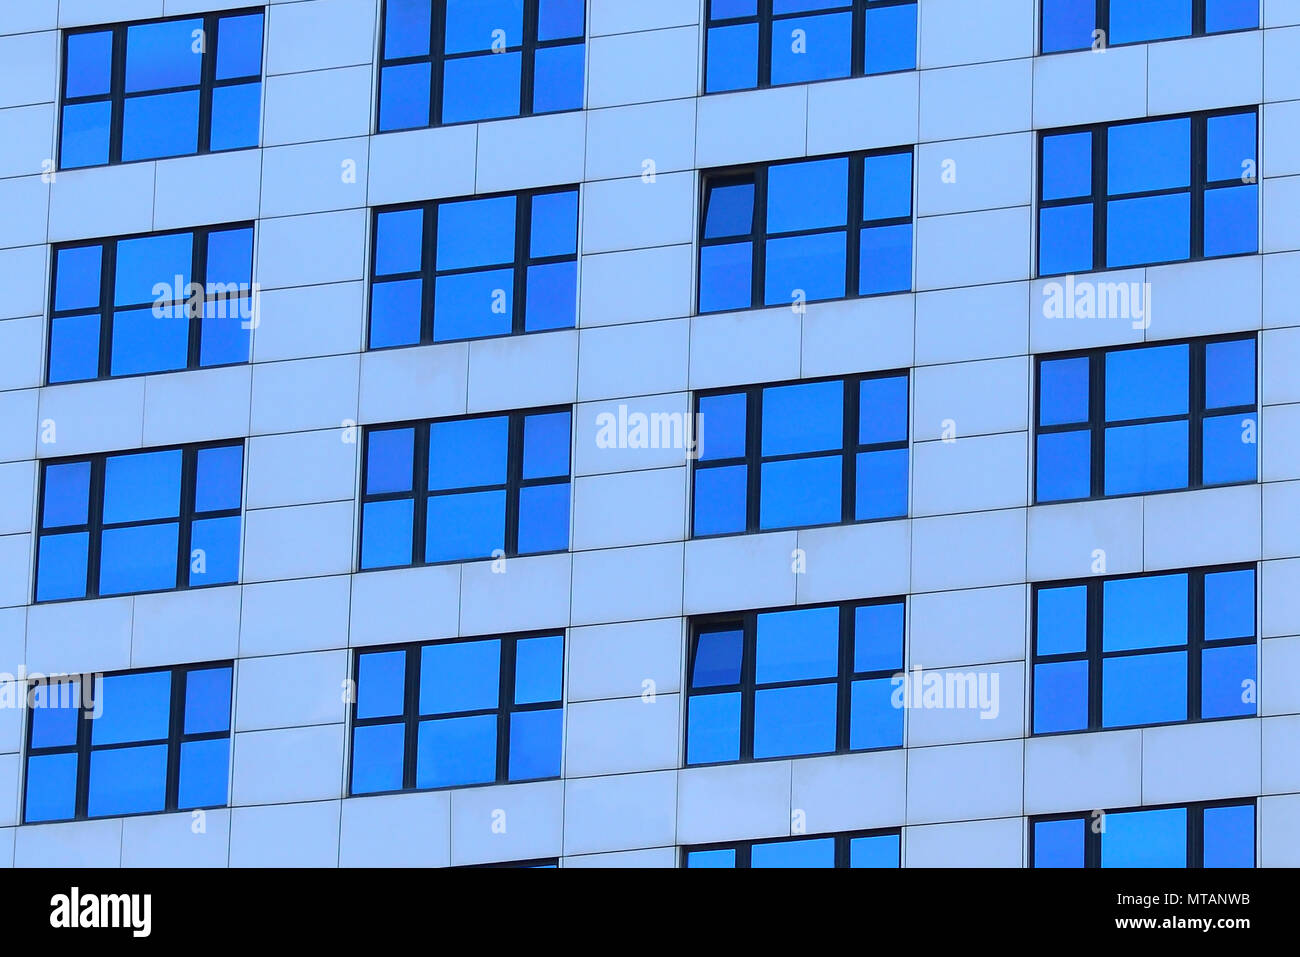 Ventanas de vidrio azul fotografías e imágenes de alta resolución - Alamy